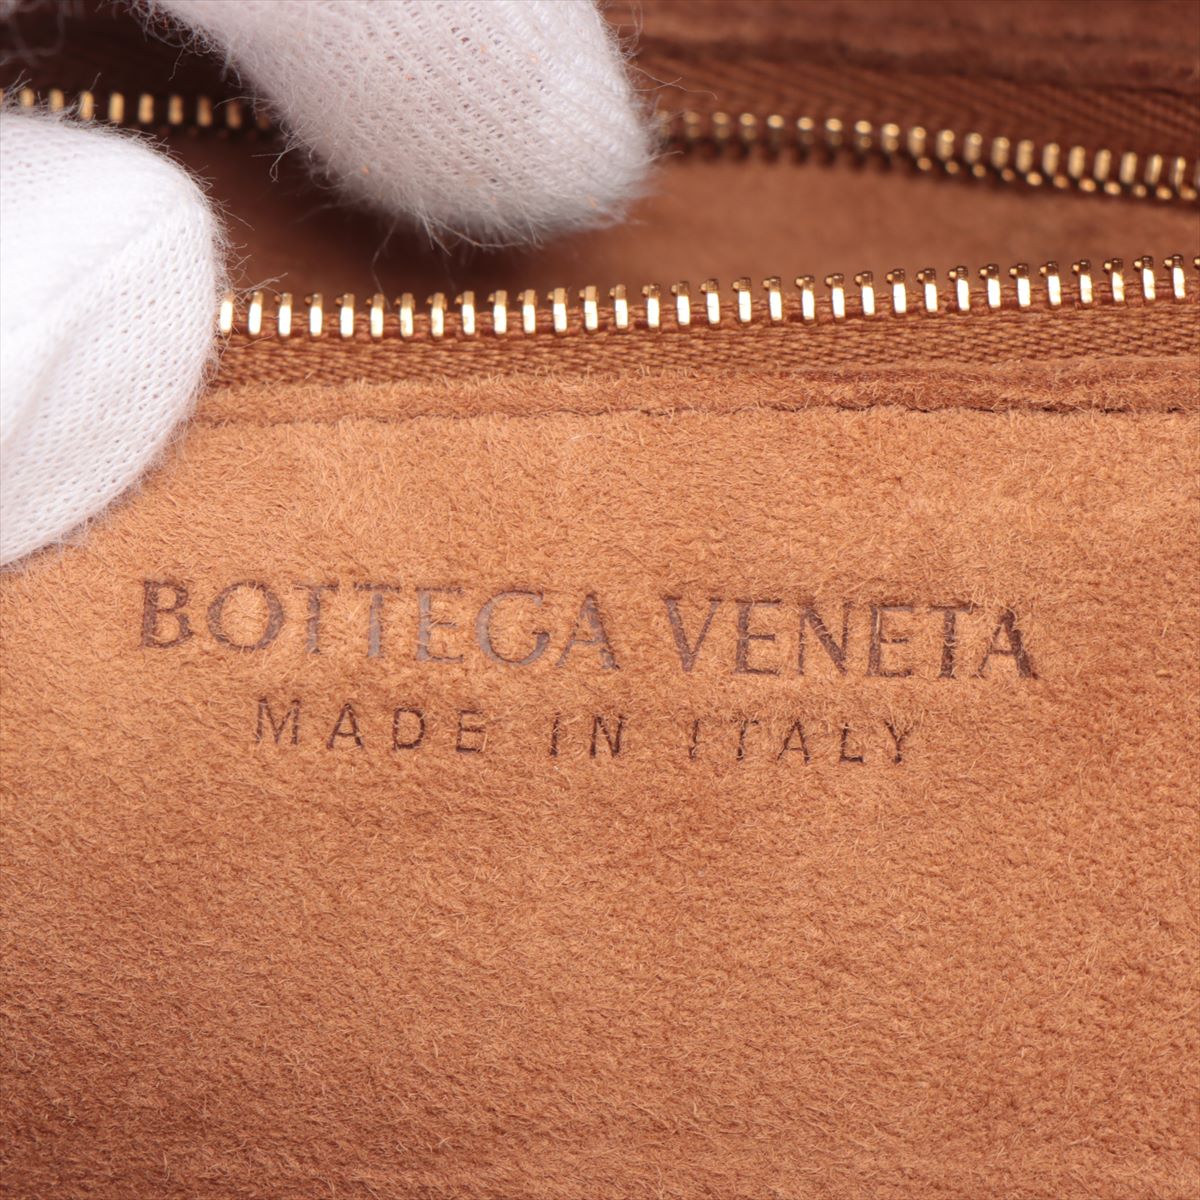 Bottega Veneta Maxine Introduction The Arcoic Leather 2WAY Handbag Beige